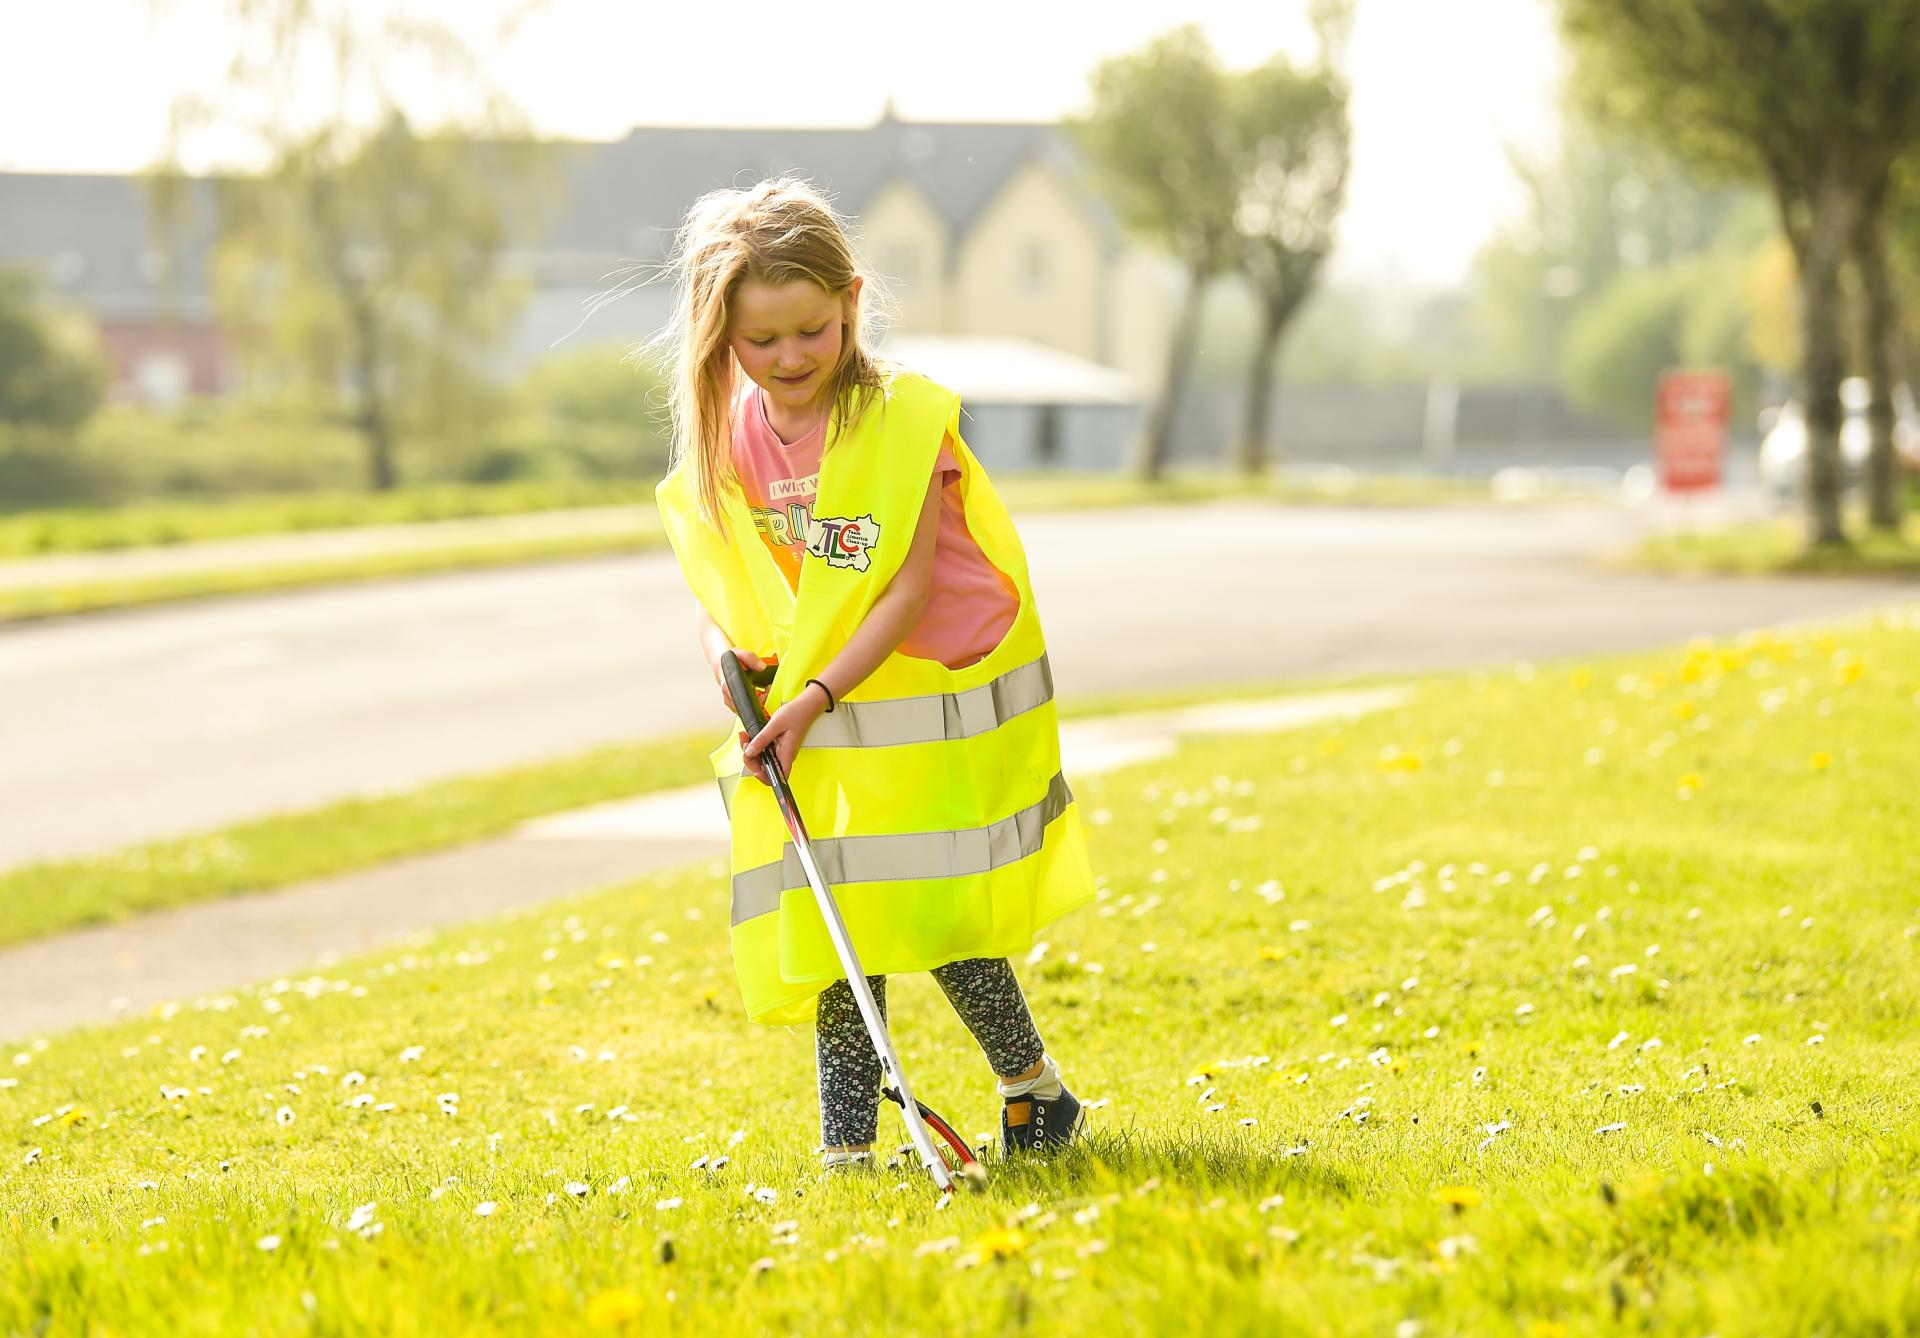 A young girl picks up litter